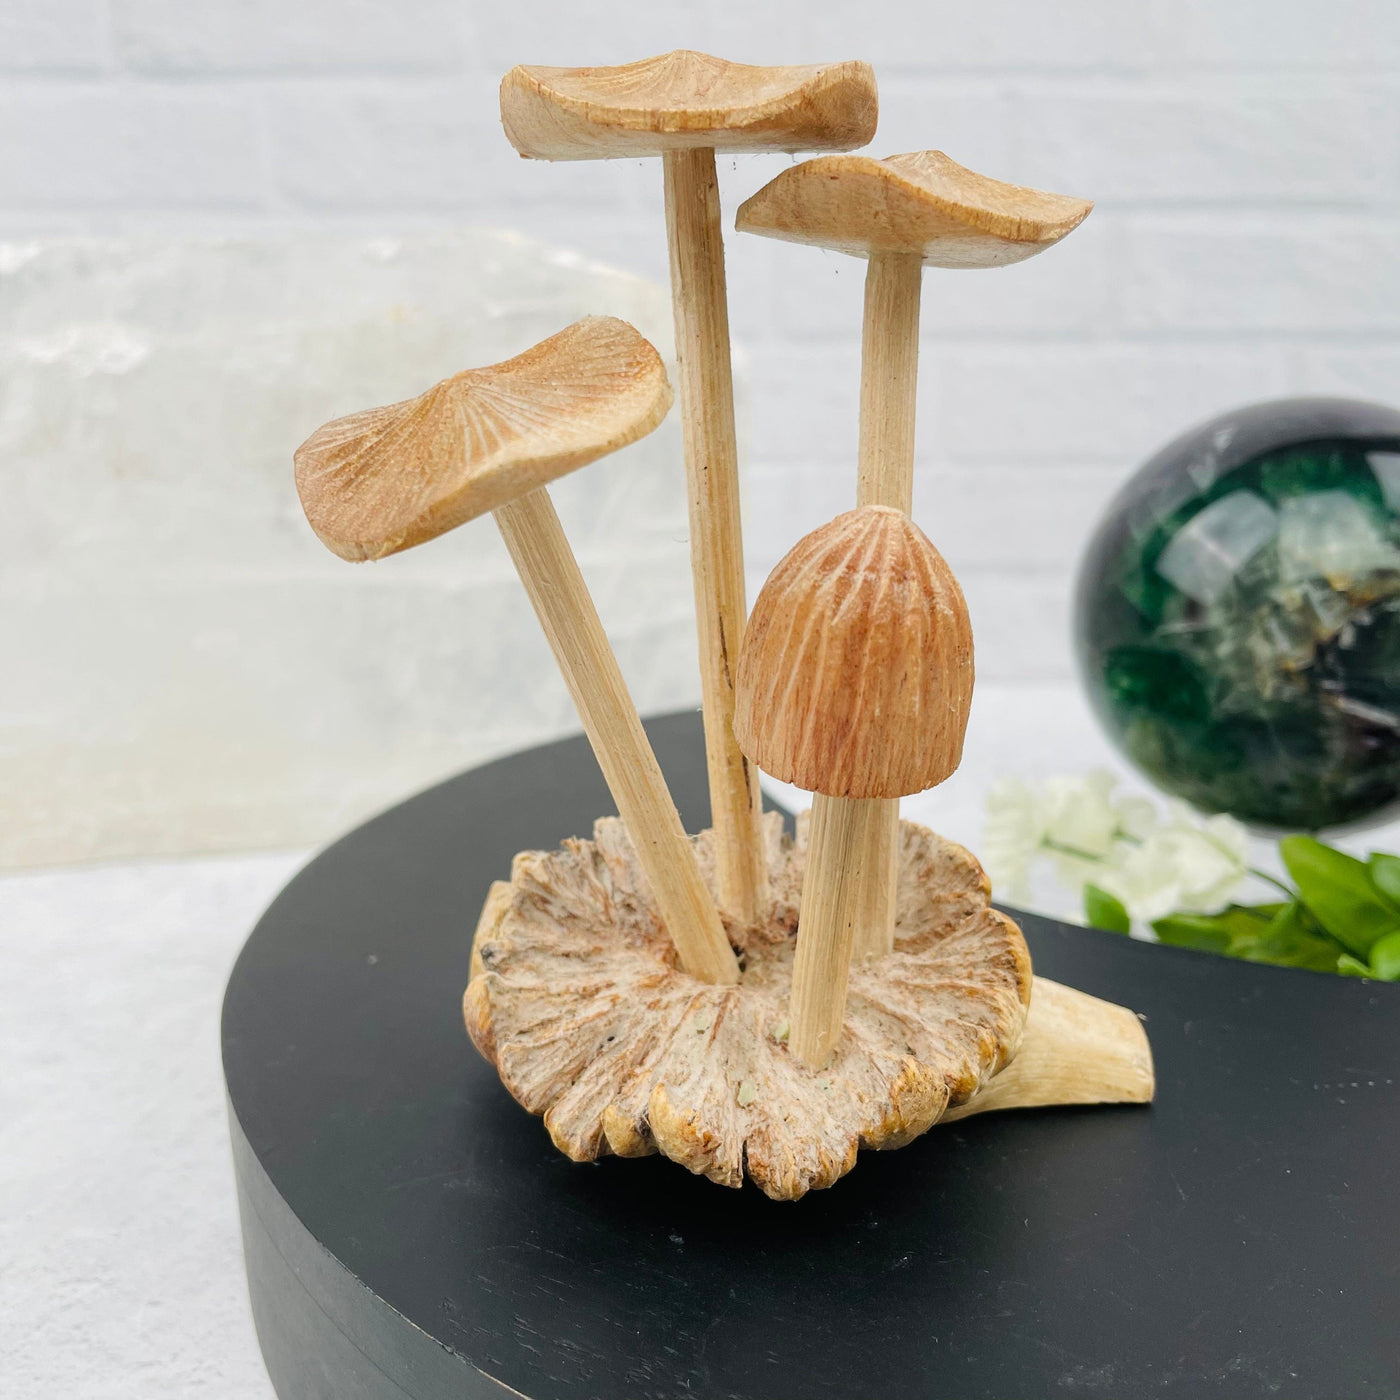 carved mushroom displayed as home decor